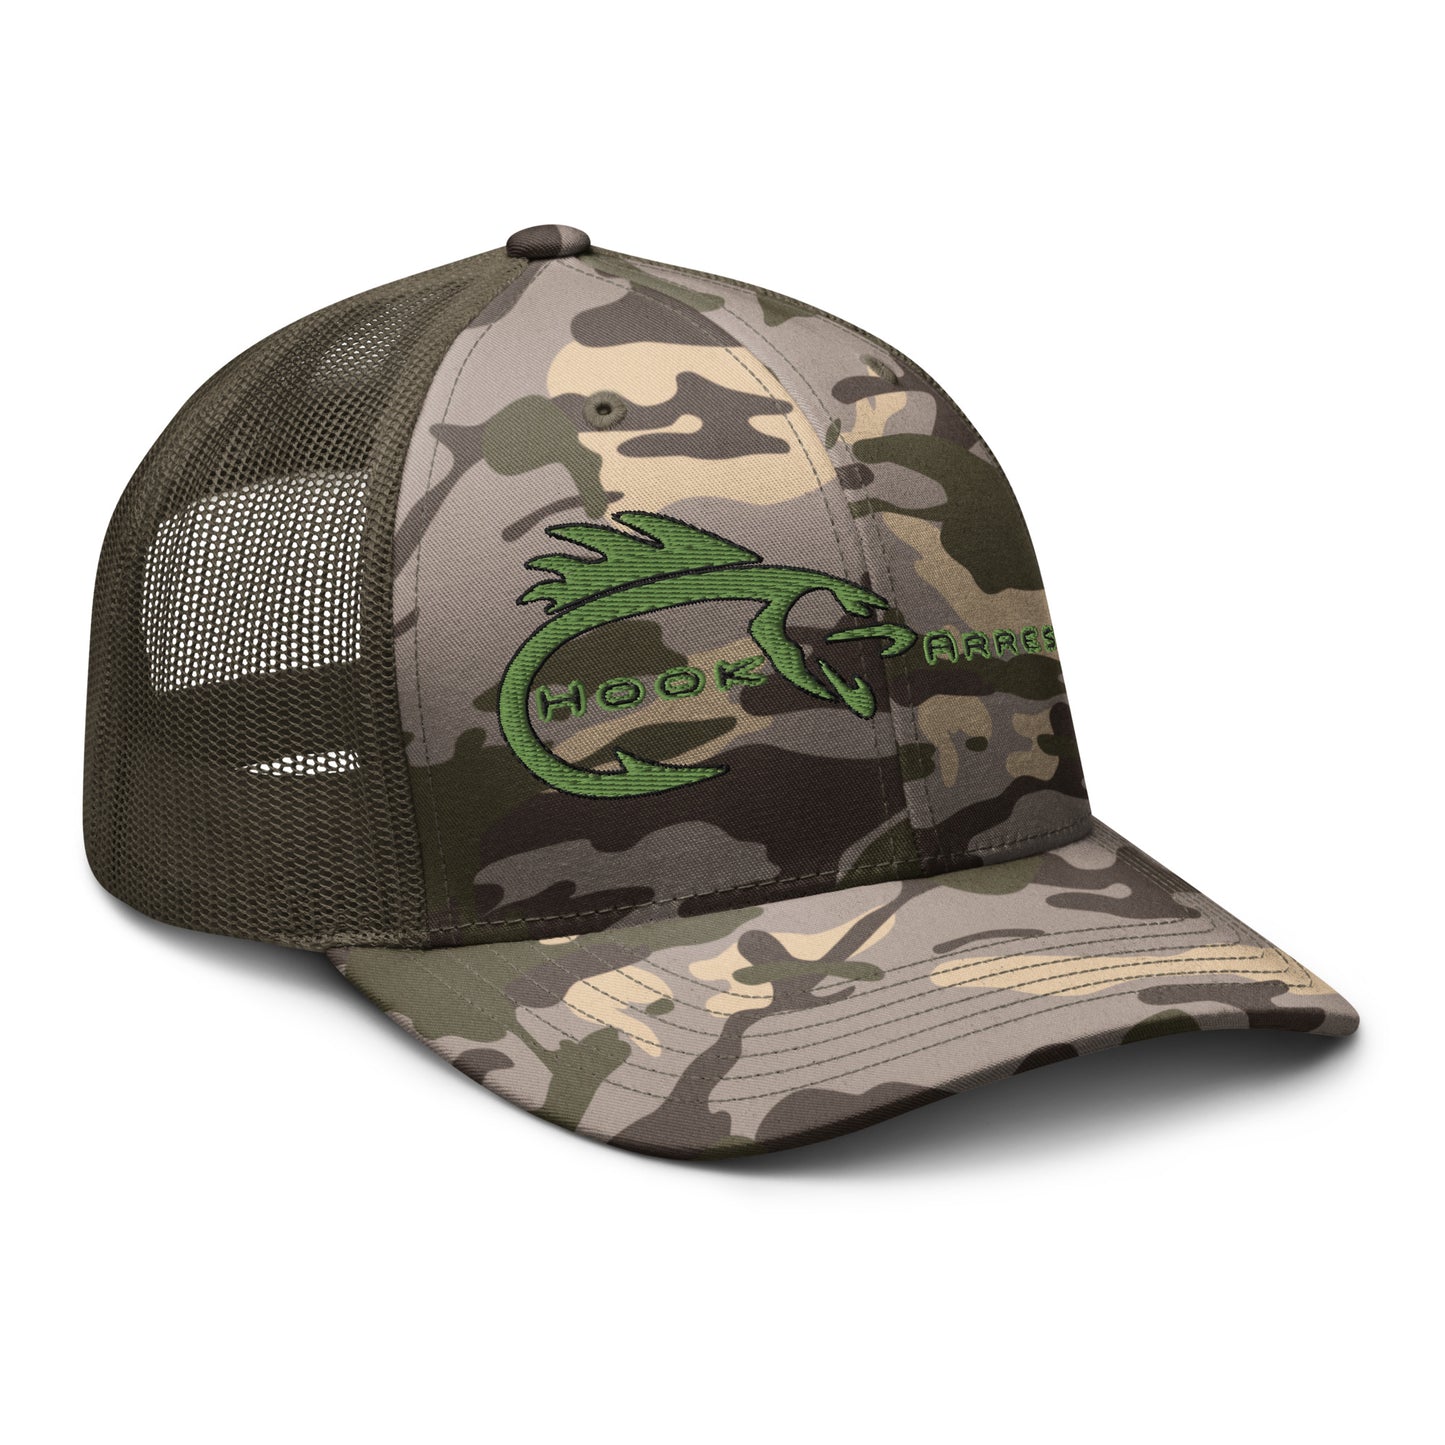 Hook Arrest Camouflage trucker hat